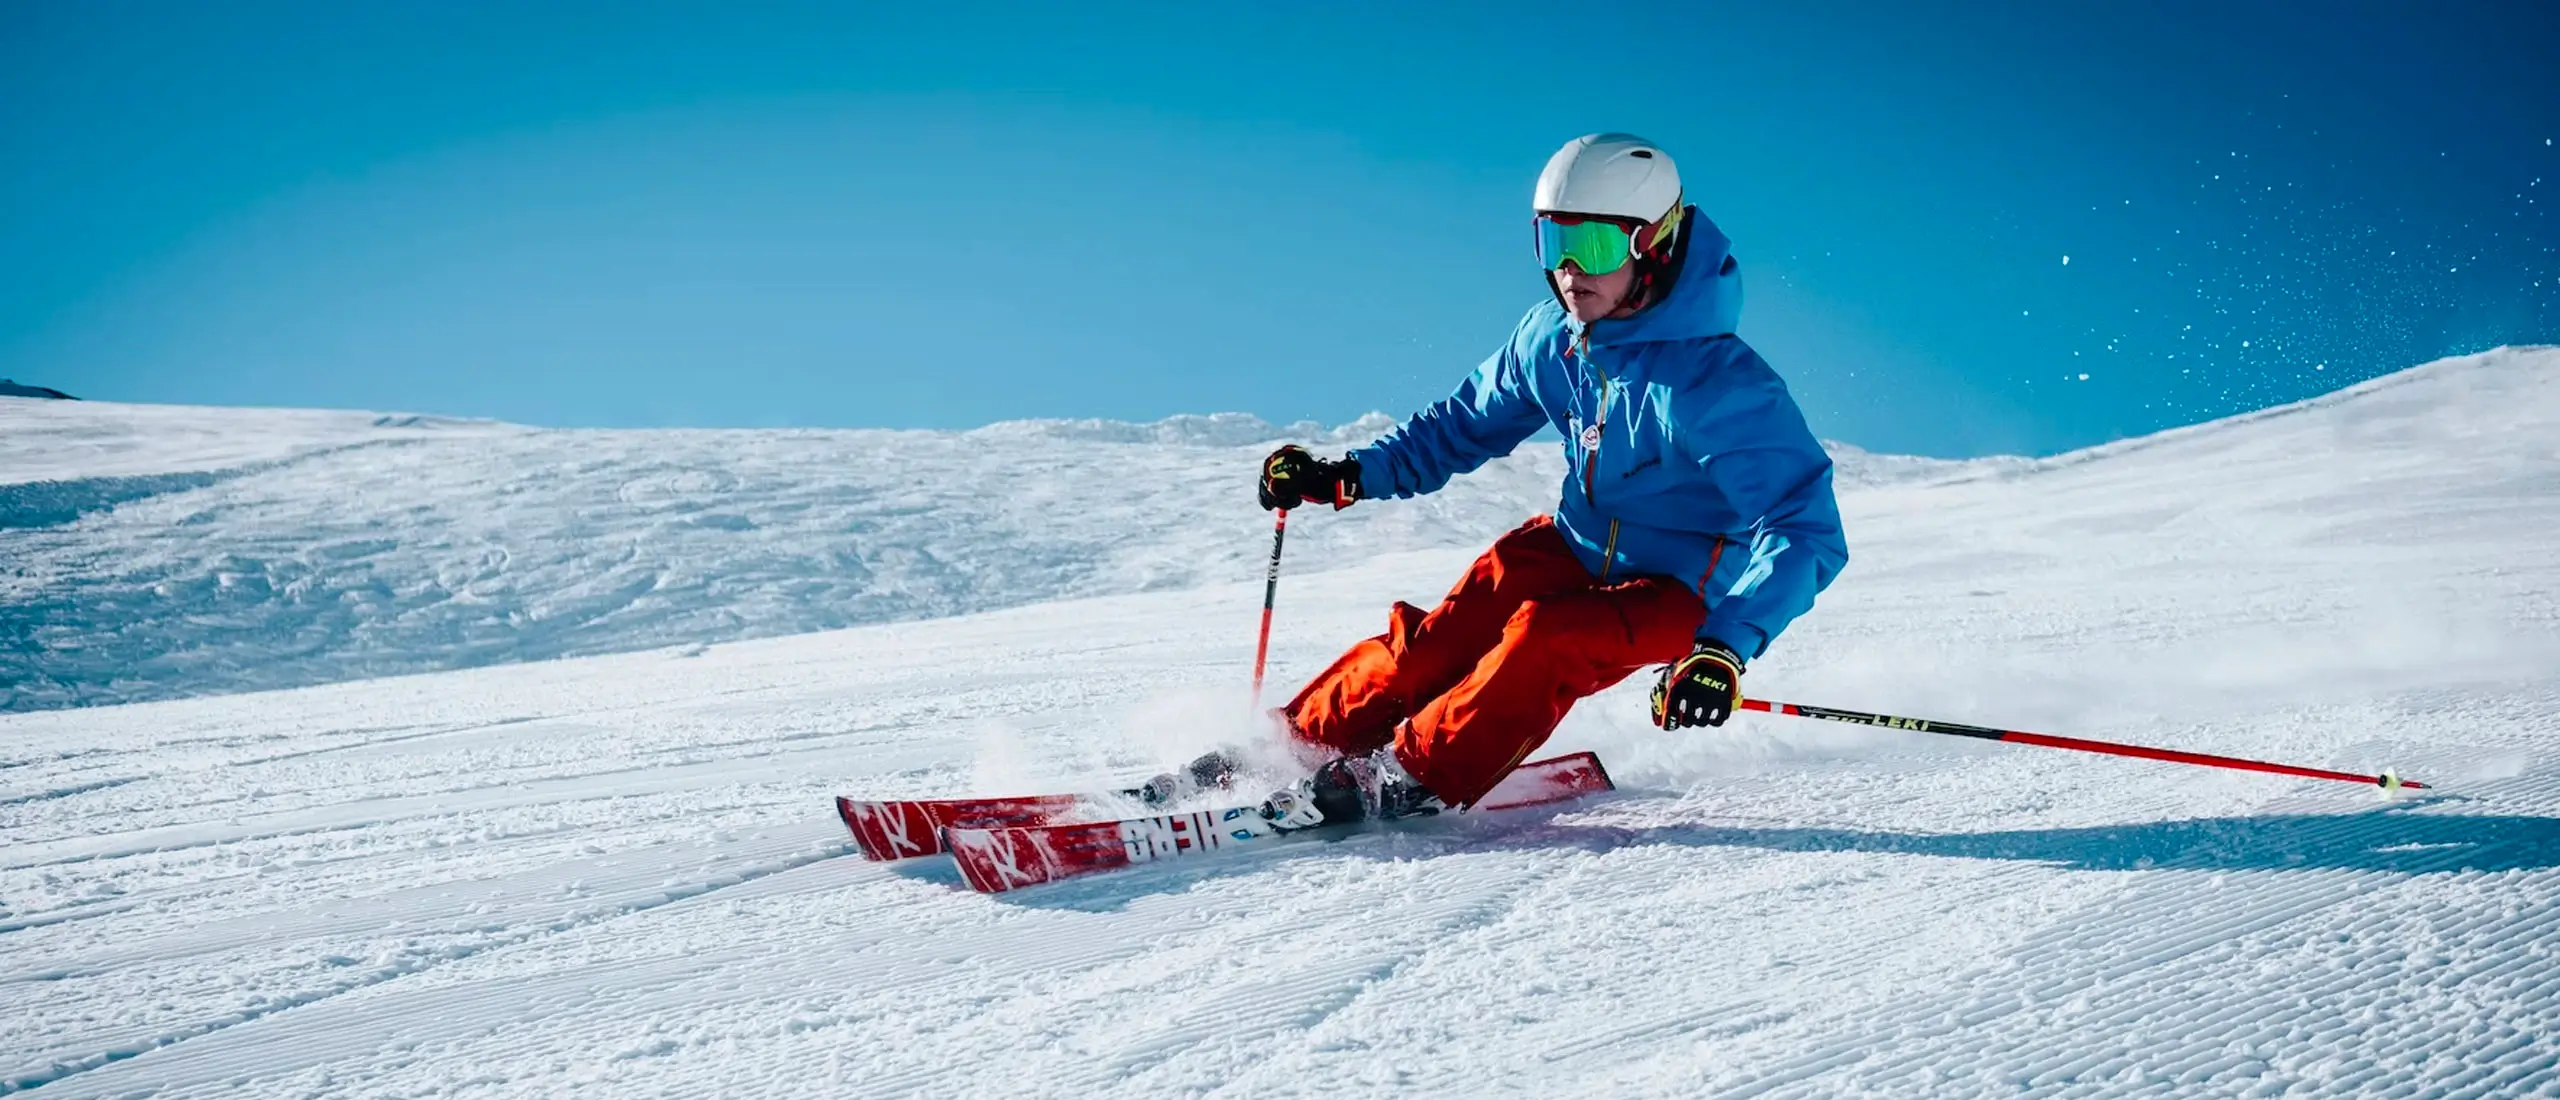 Downhill skiier skiing down slope